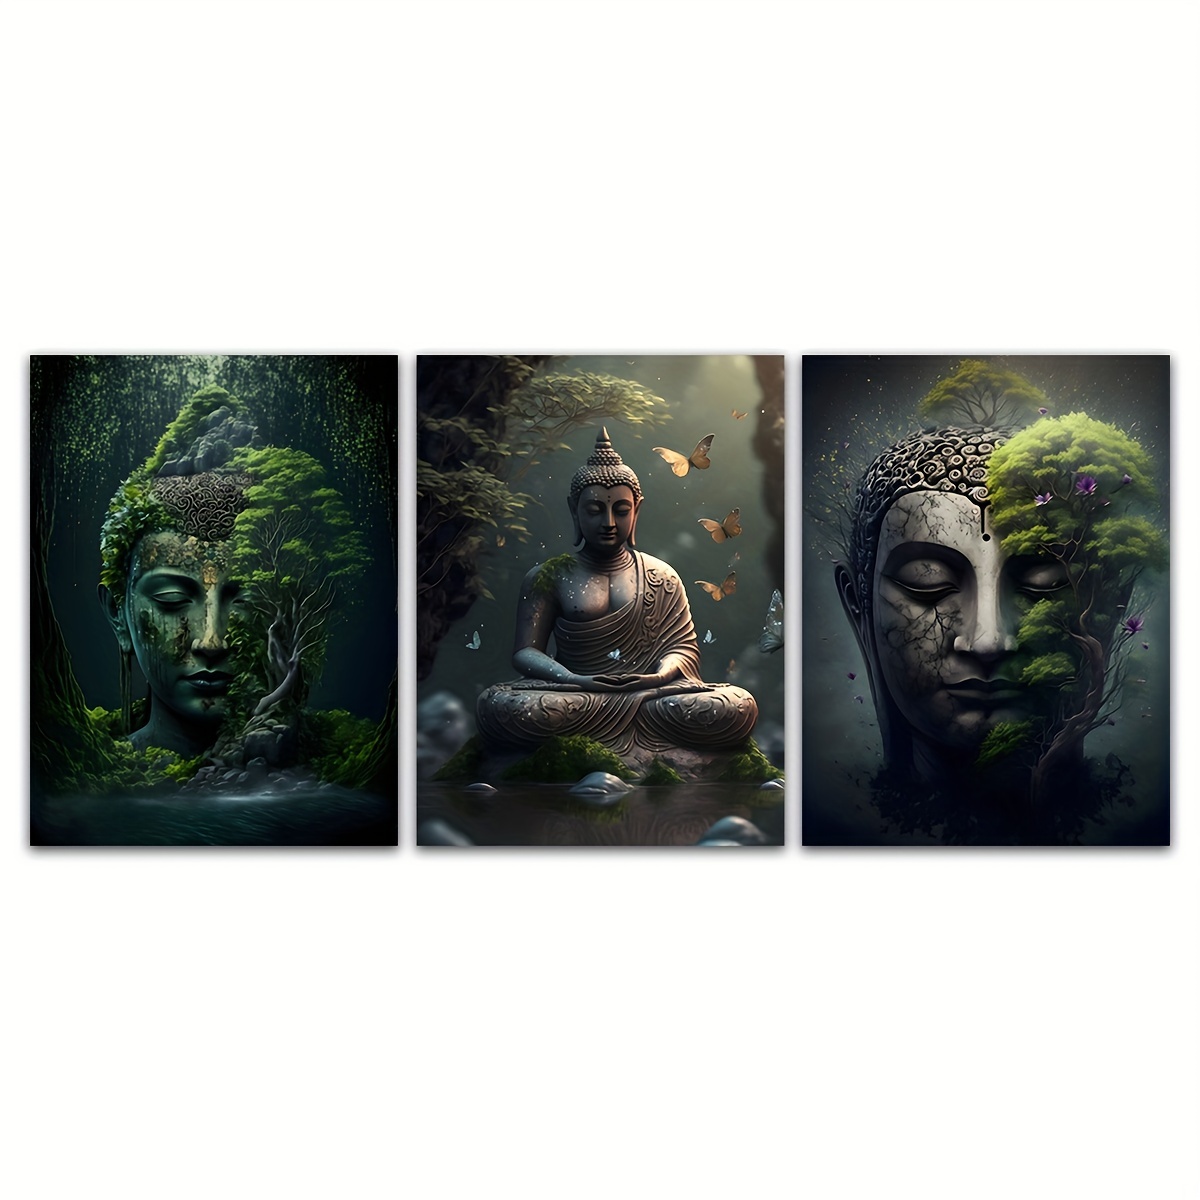  Estatua de Buda - Arte de pared inspirador de Buda Zen,  decoración de pared motivacional de Buda, cuadro de lienzo impreso zen para  decoración del hogar, regalos espirituales para hombres, mujeres